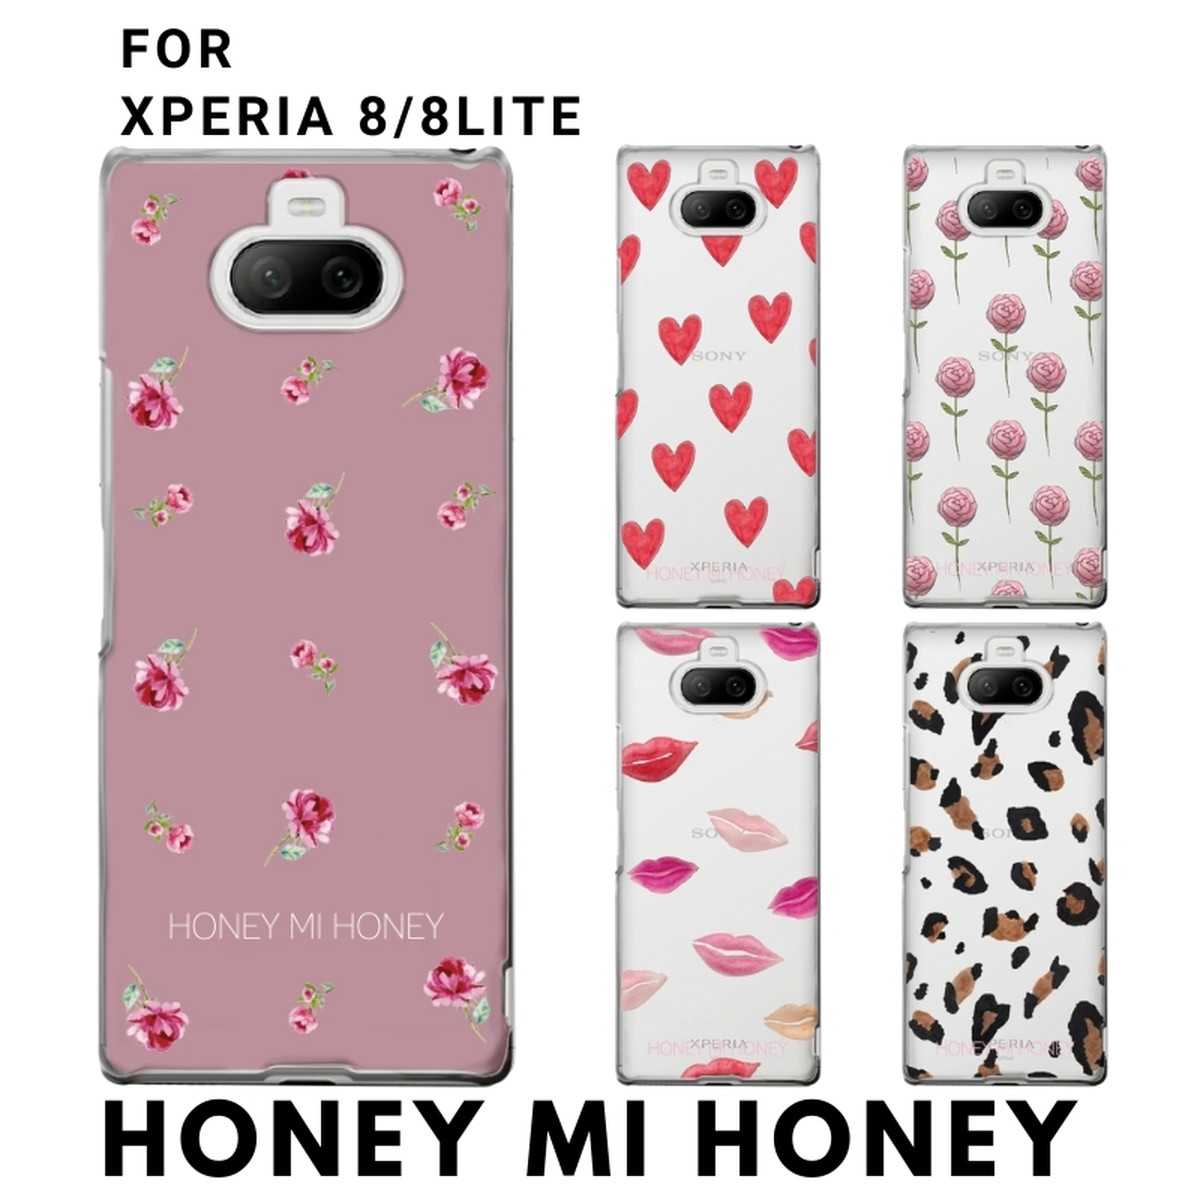 Xperia 8 Xperia 8lite Honey Mi Honey ハニーミーハニー ハードケース クリアケース スマホケース Xperia8 Xperia8lite エクスペリア Android ケース 携帯ケース Oneword Iphoneケース スマホケース専門店